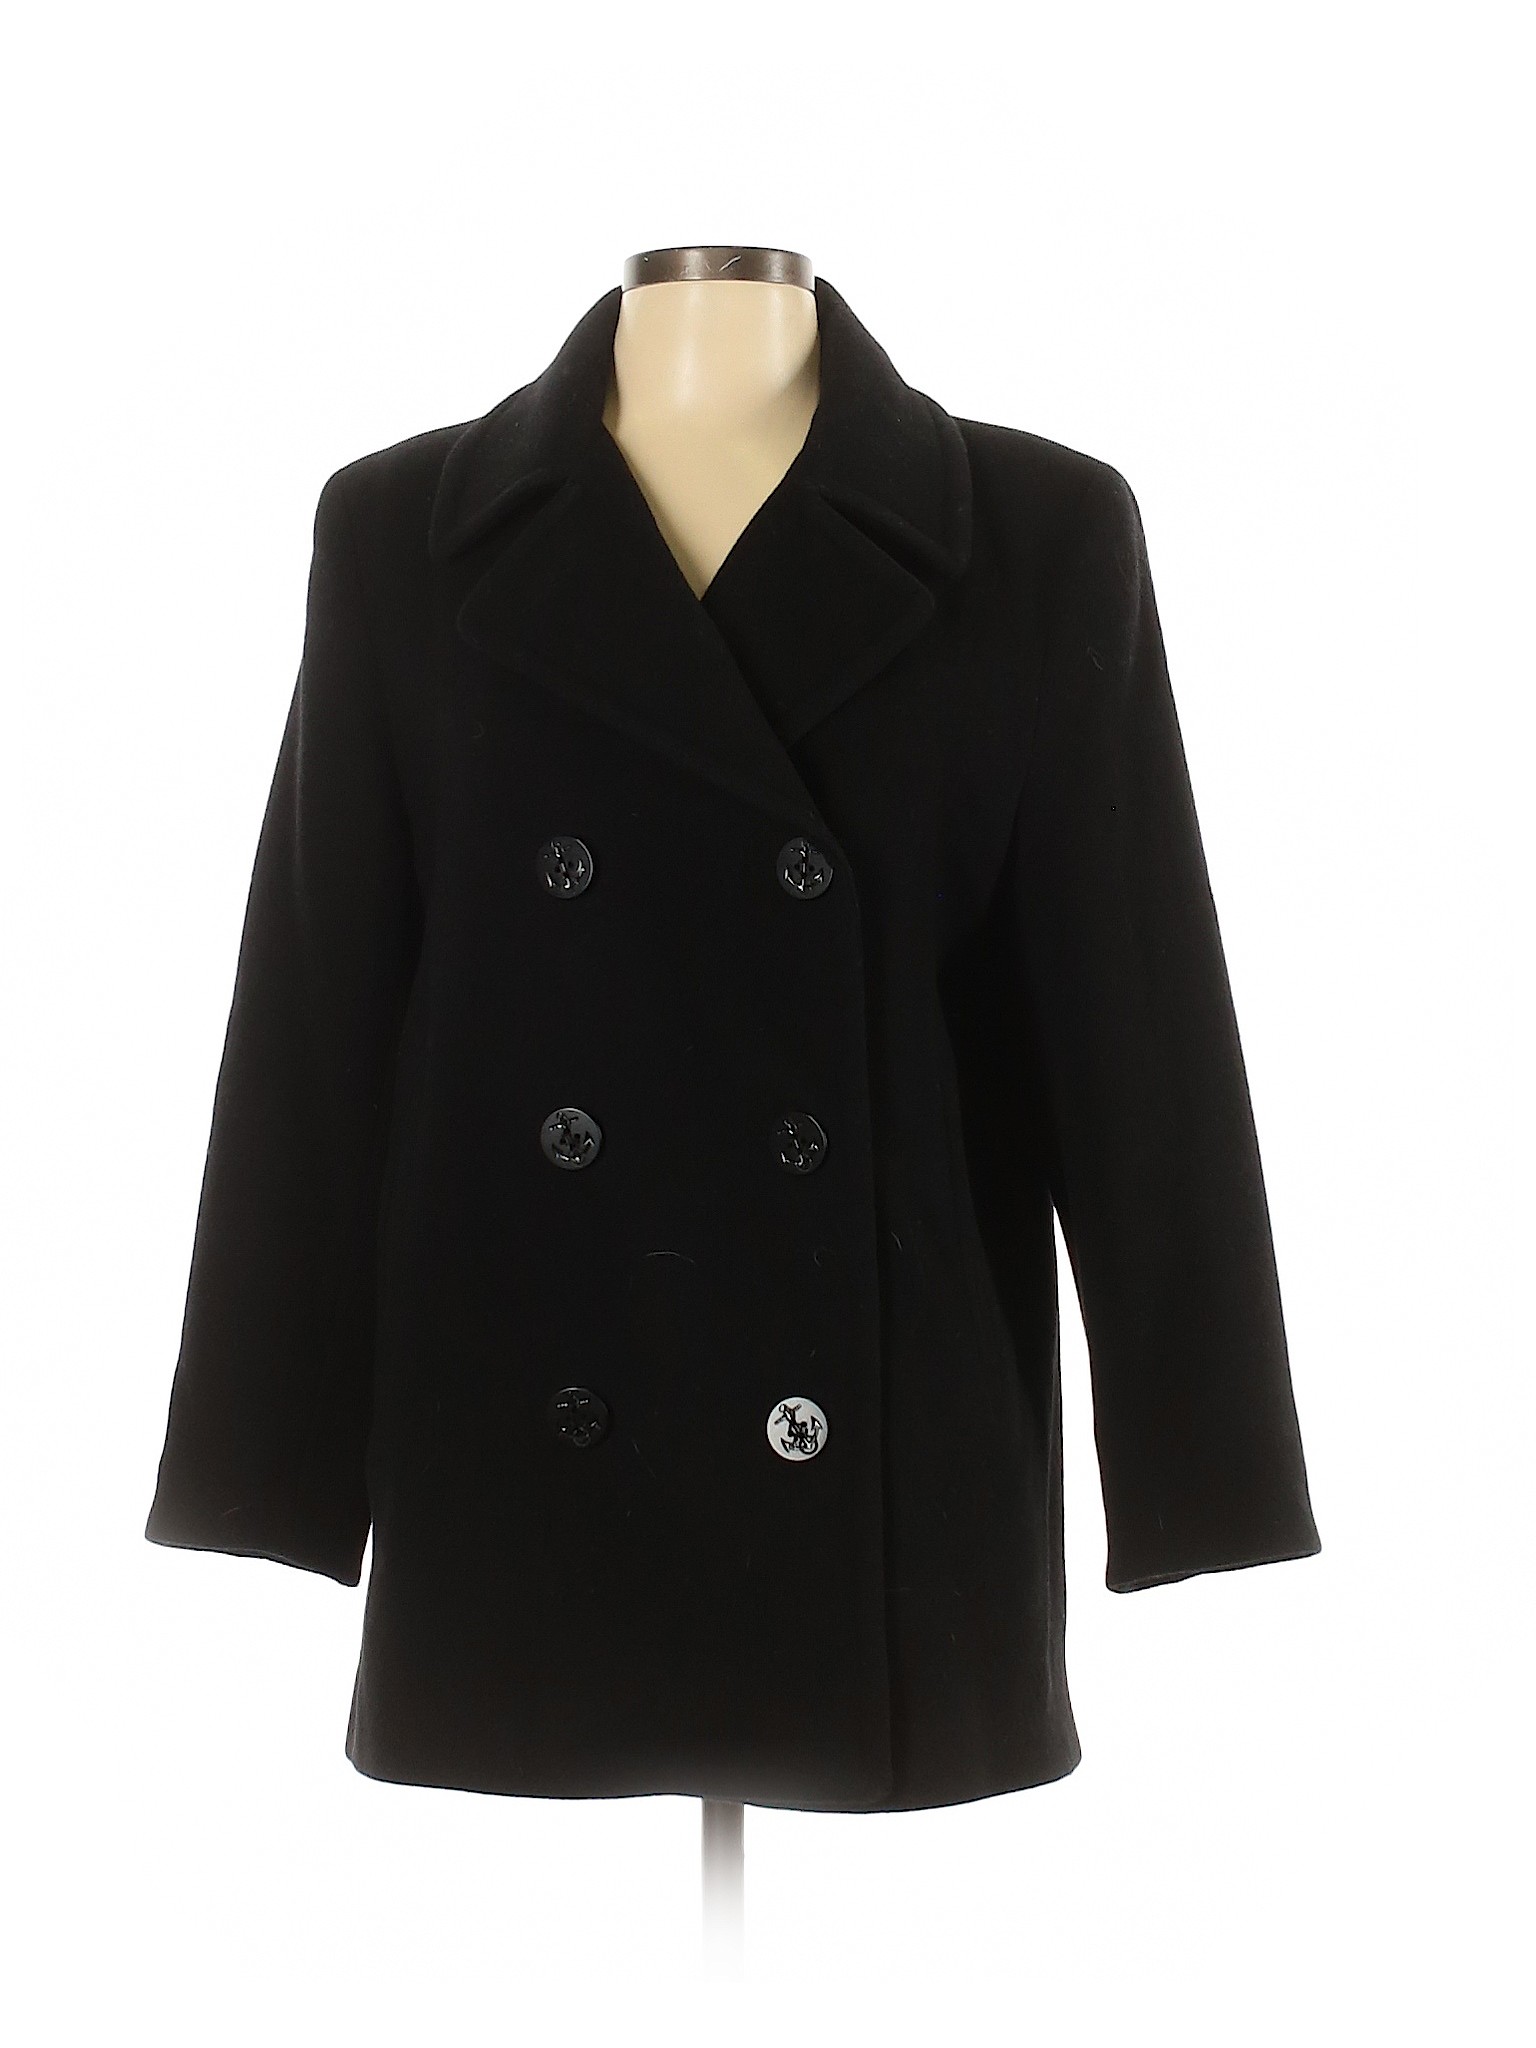 Forecaster of Boston Women Black Wool Coat 6 | eBay